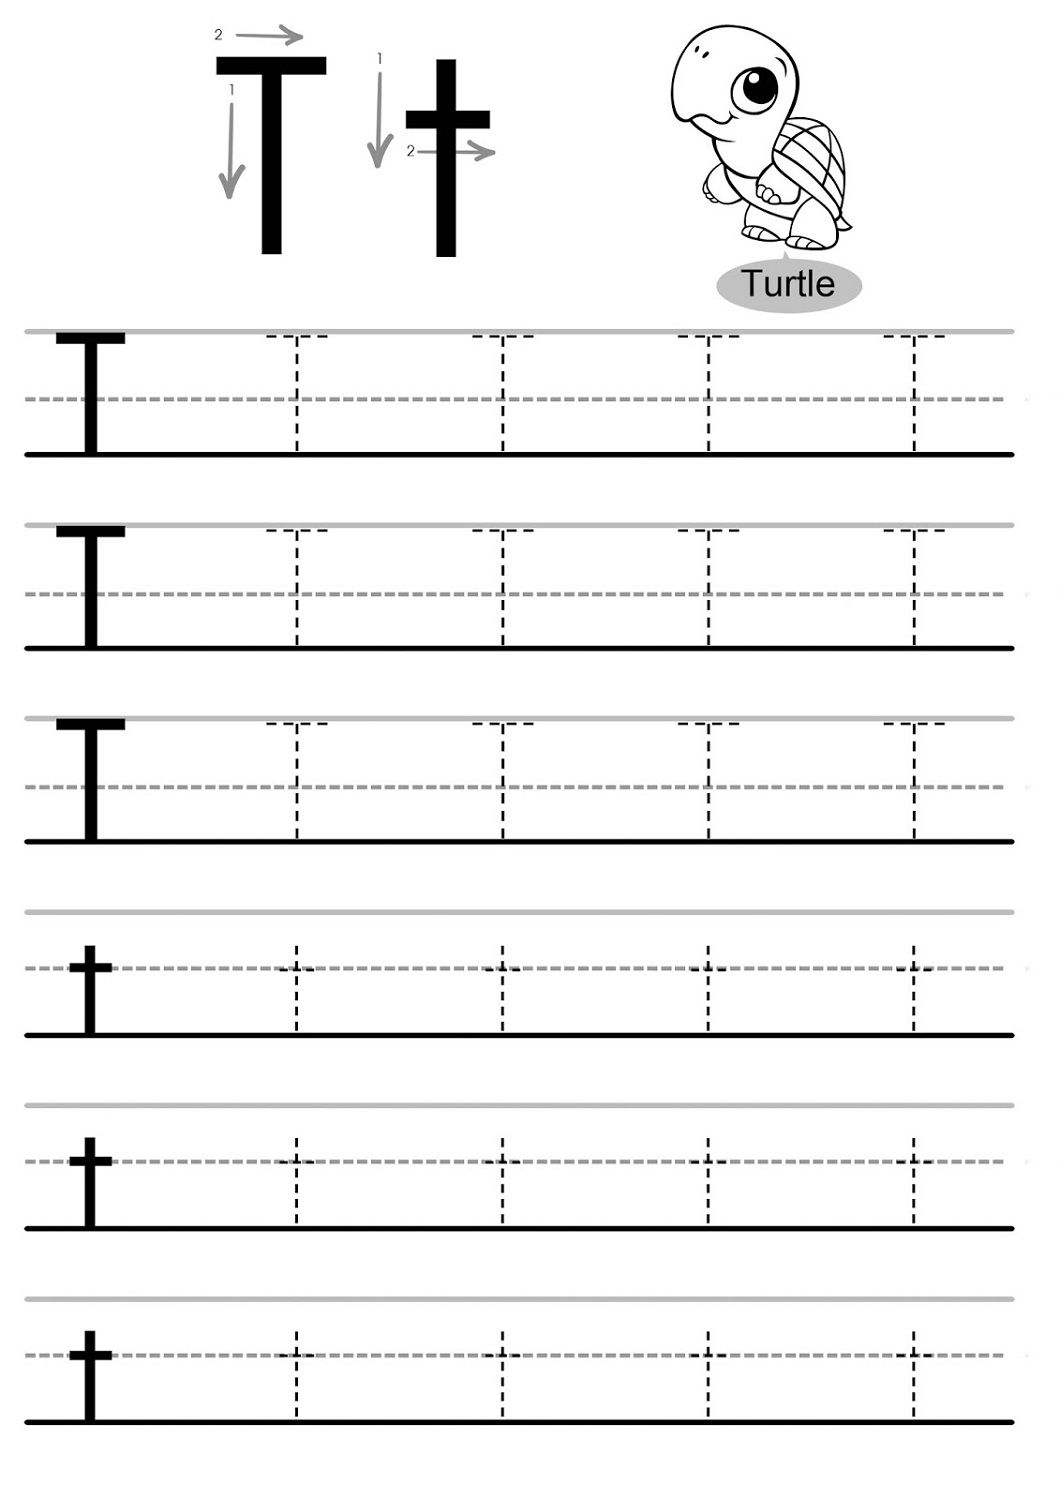 Traceable Letter Worksheets - Kids Learning Activity for Tracing The Letter I Worksheets For Preschool